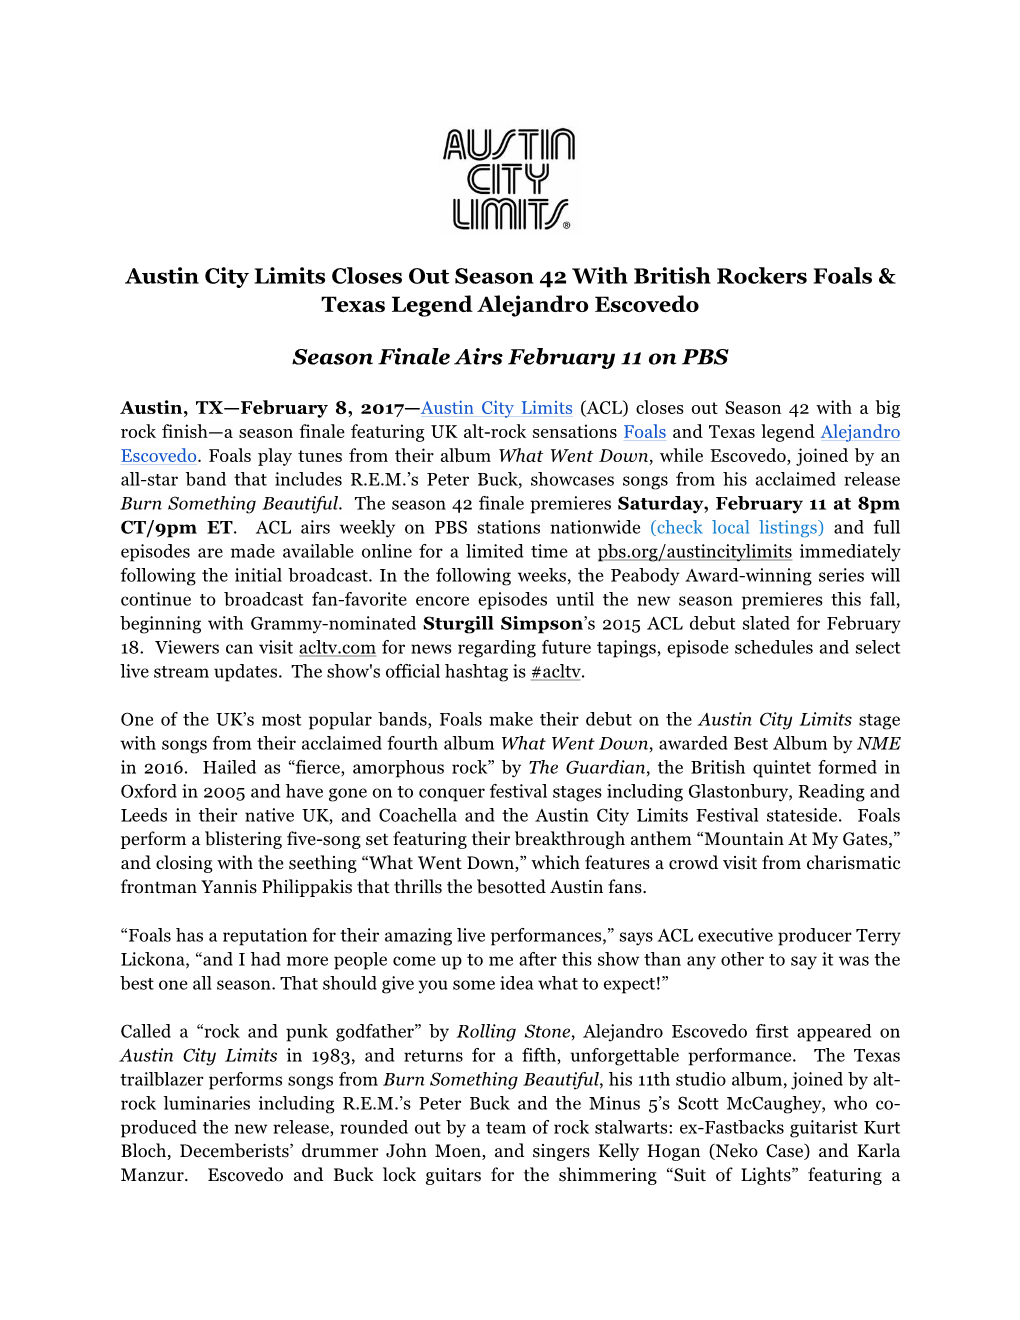 Austin City Limits Closes out Season 42 with British Rockers Foals & Texas Legend Alejandro Escovedo